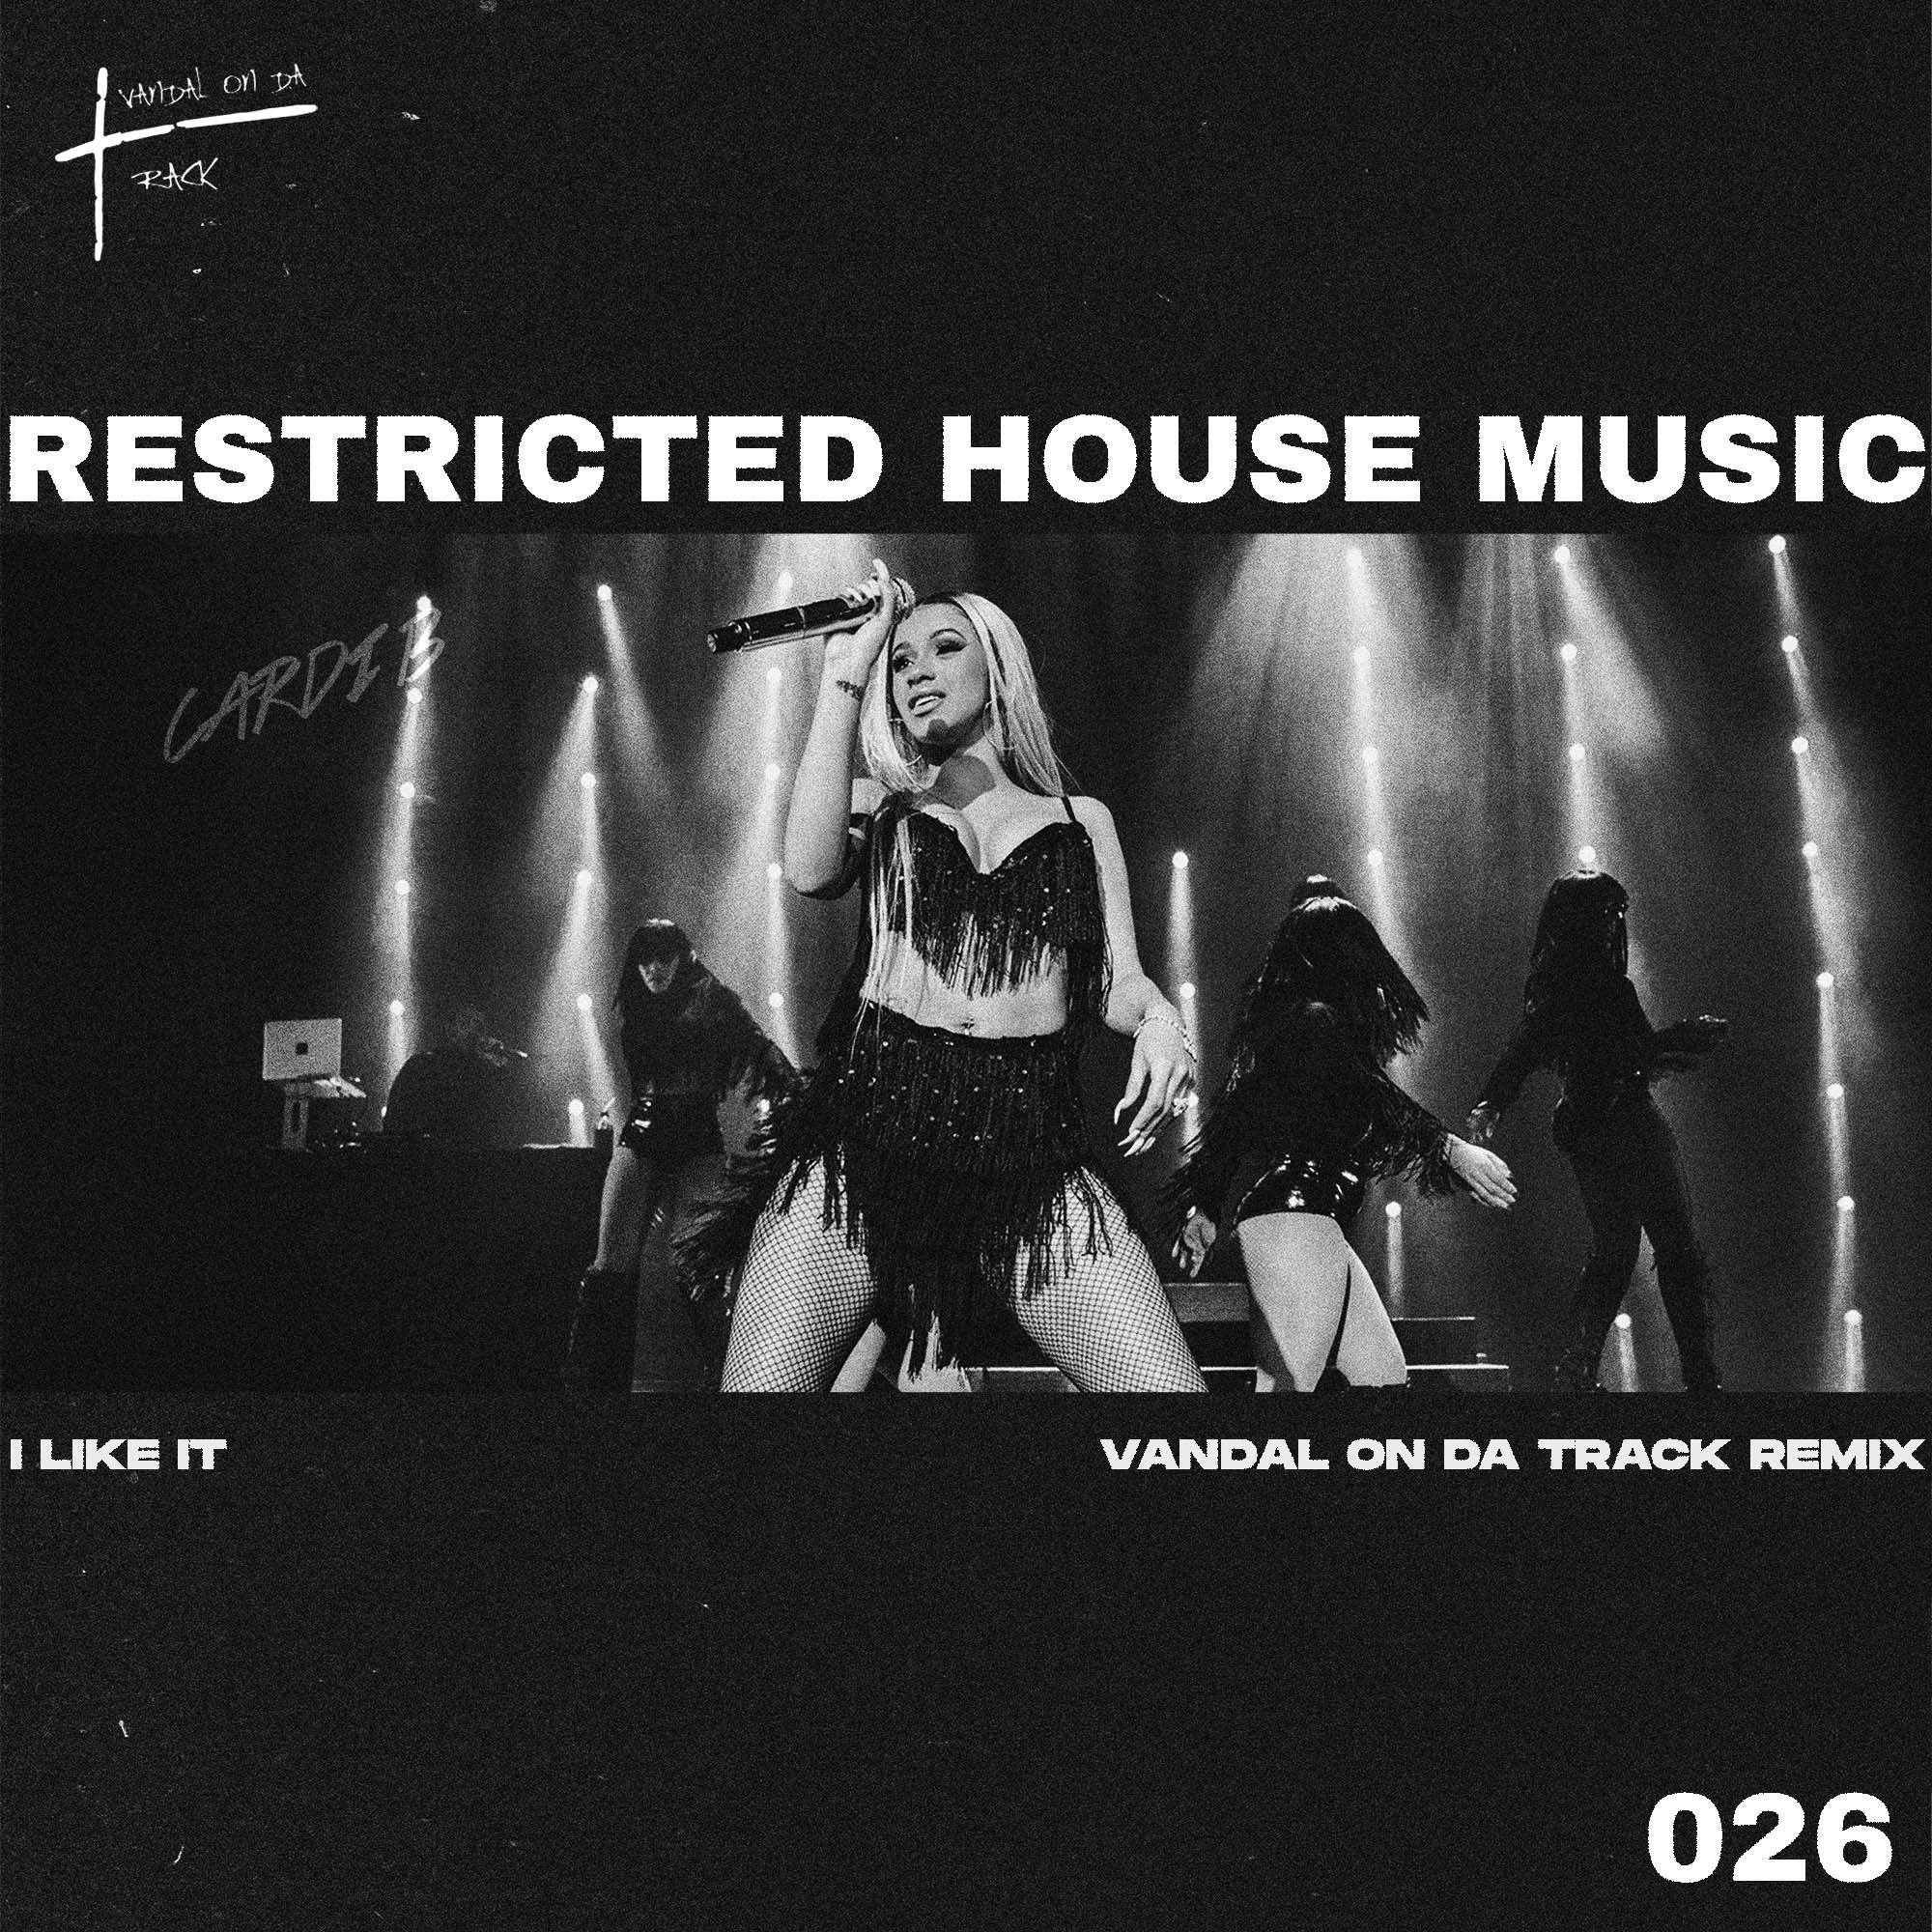 Descargar Cardi B - I Like It (Vandal On Da Track & Ravage Remix) (Restricted House Music 026) FREE DL